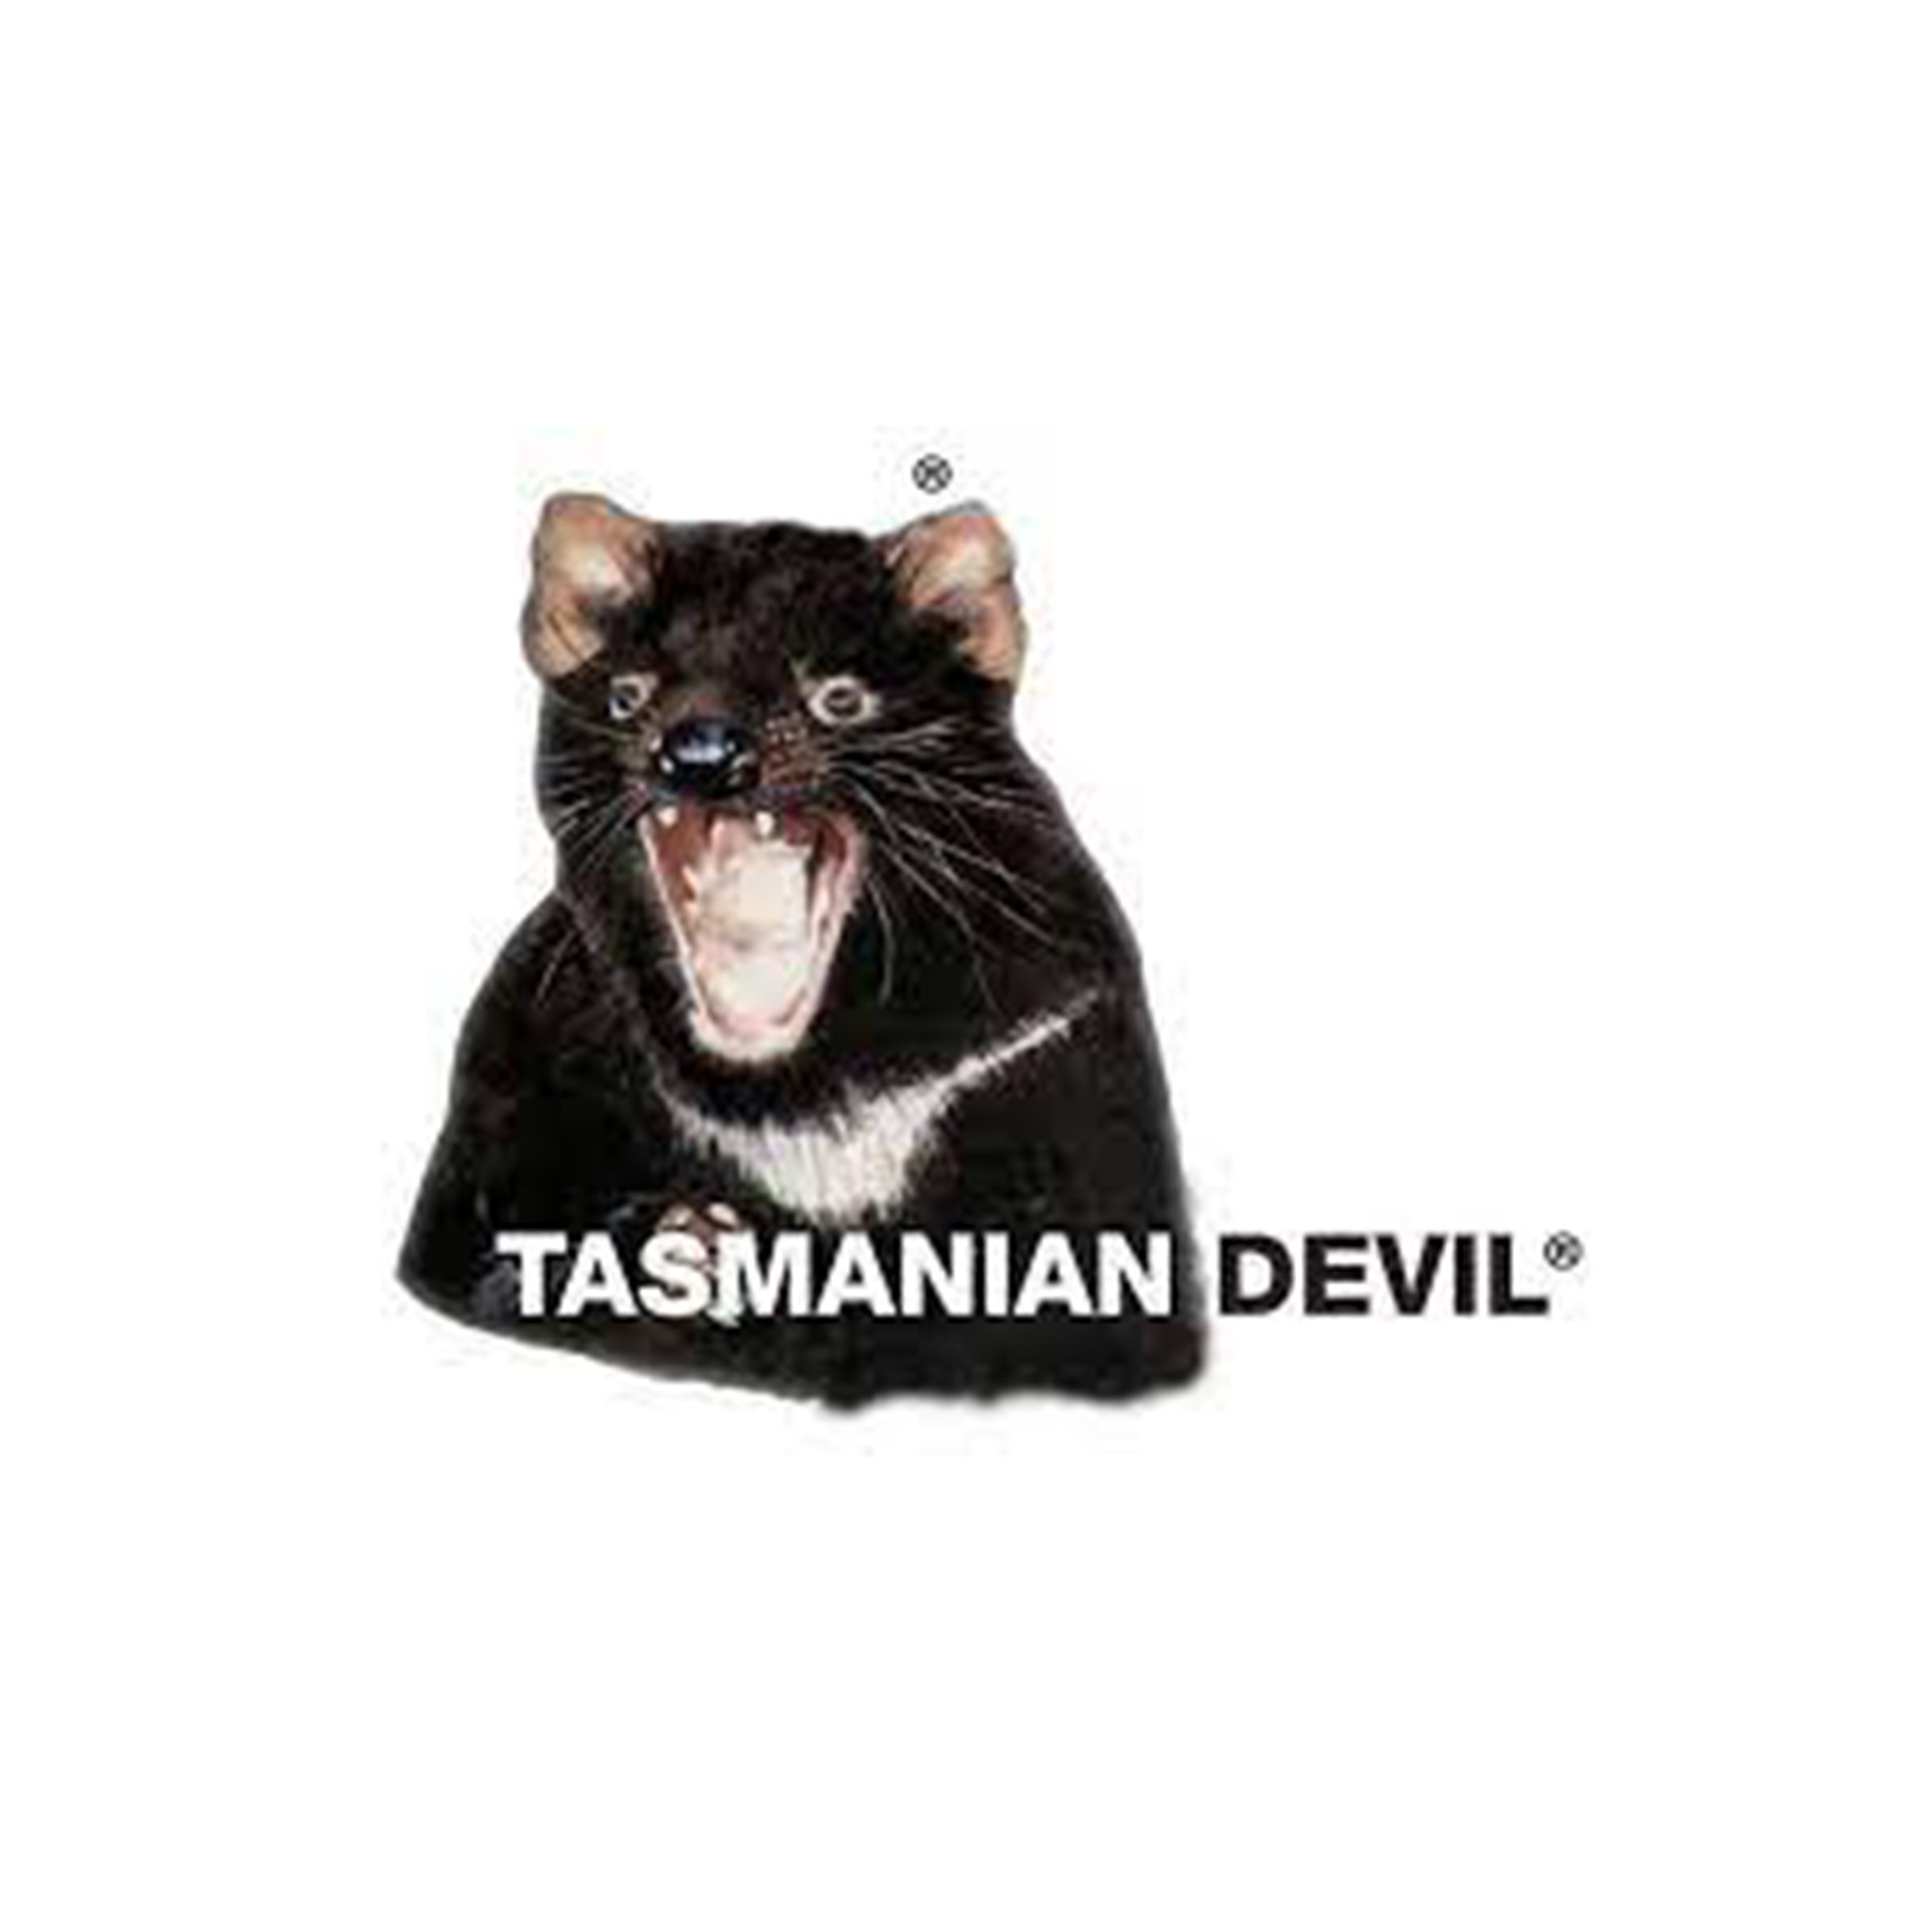 A_Tasmanian-Devil_logo